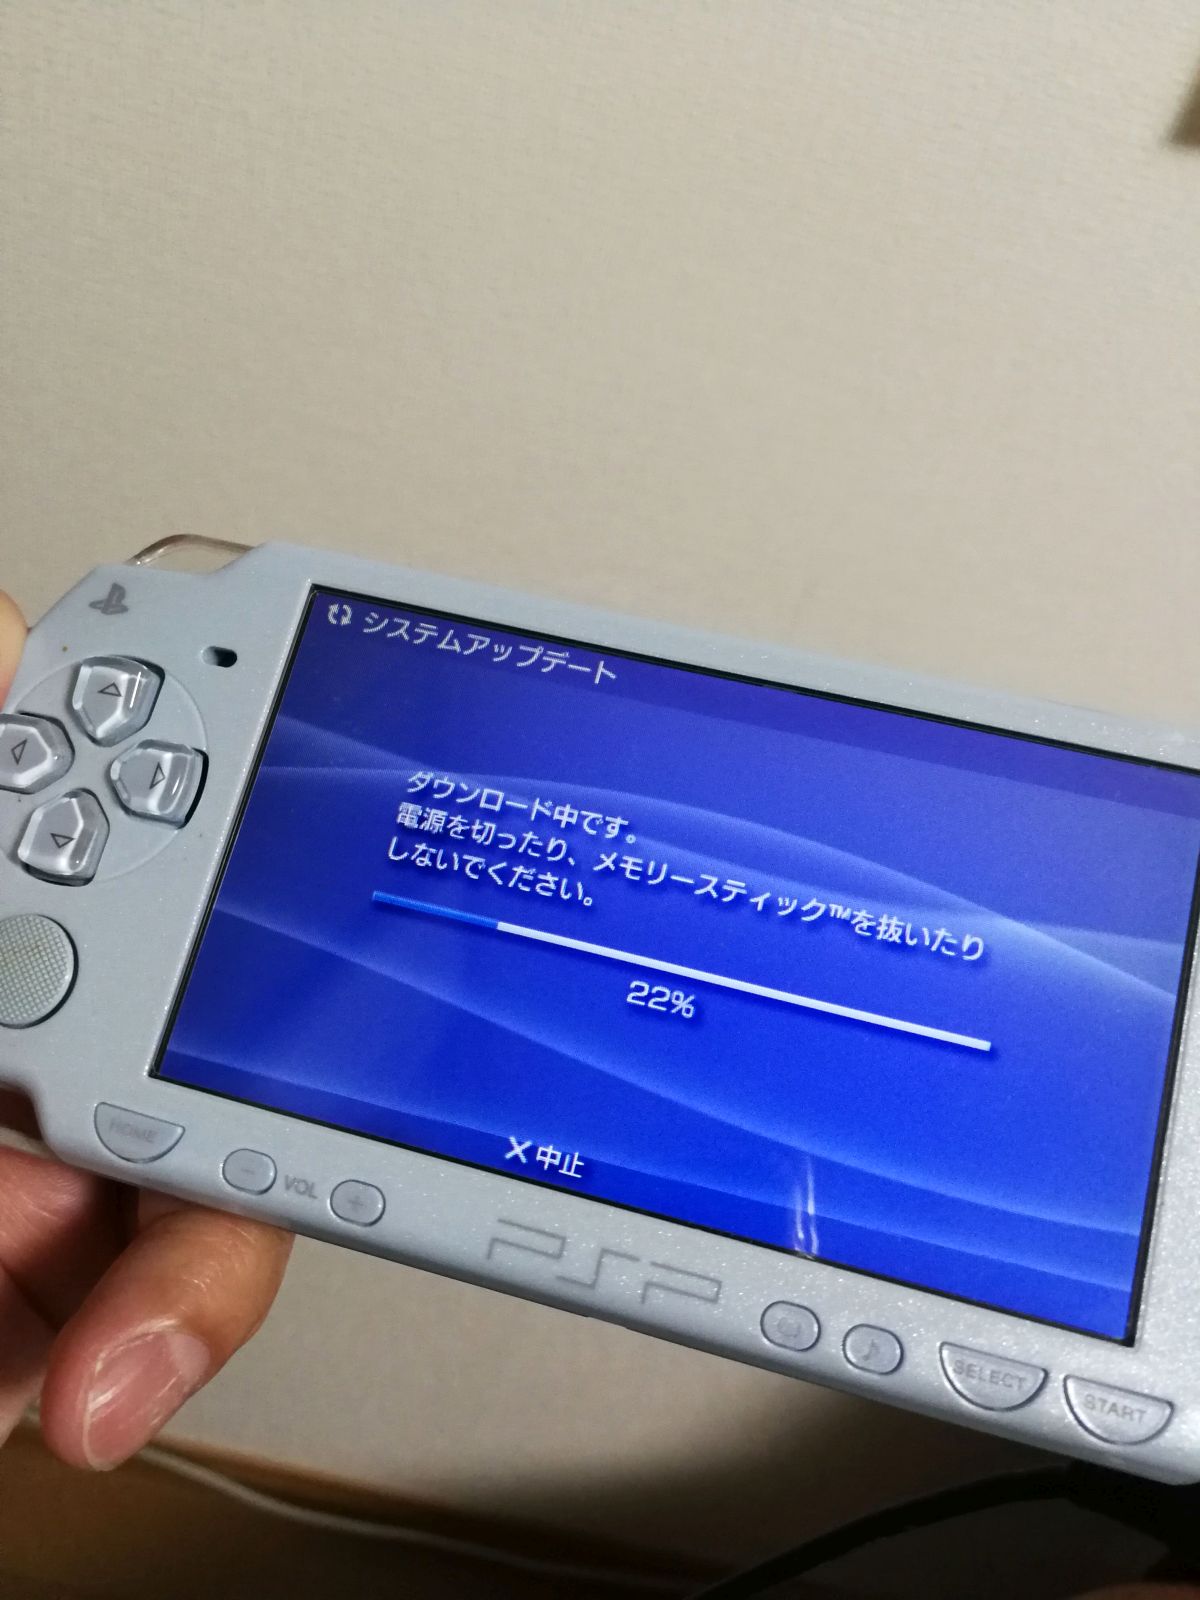 PSPのシステムアップデート